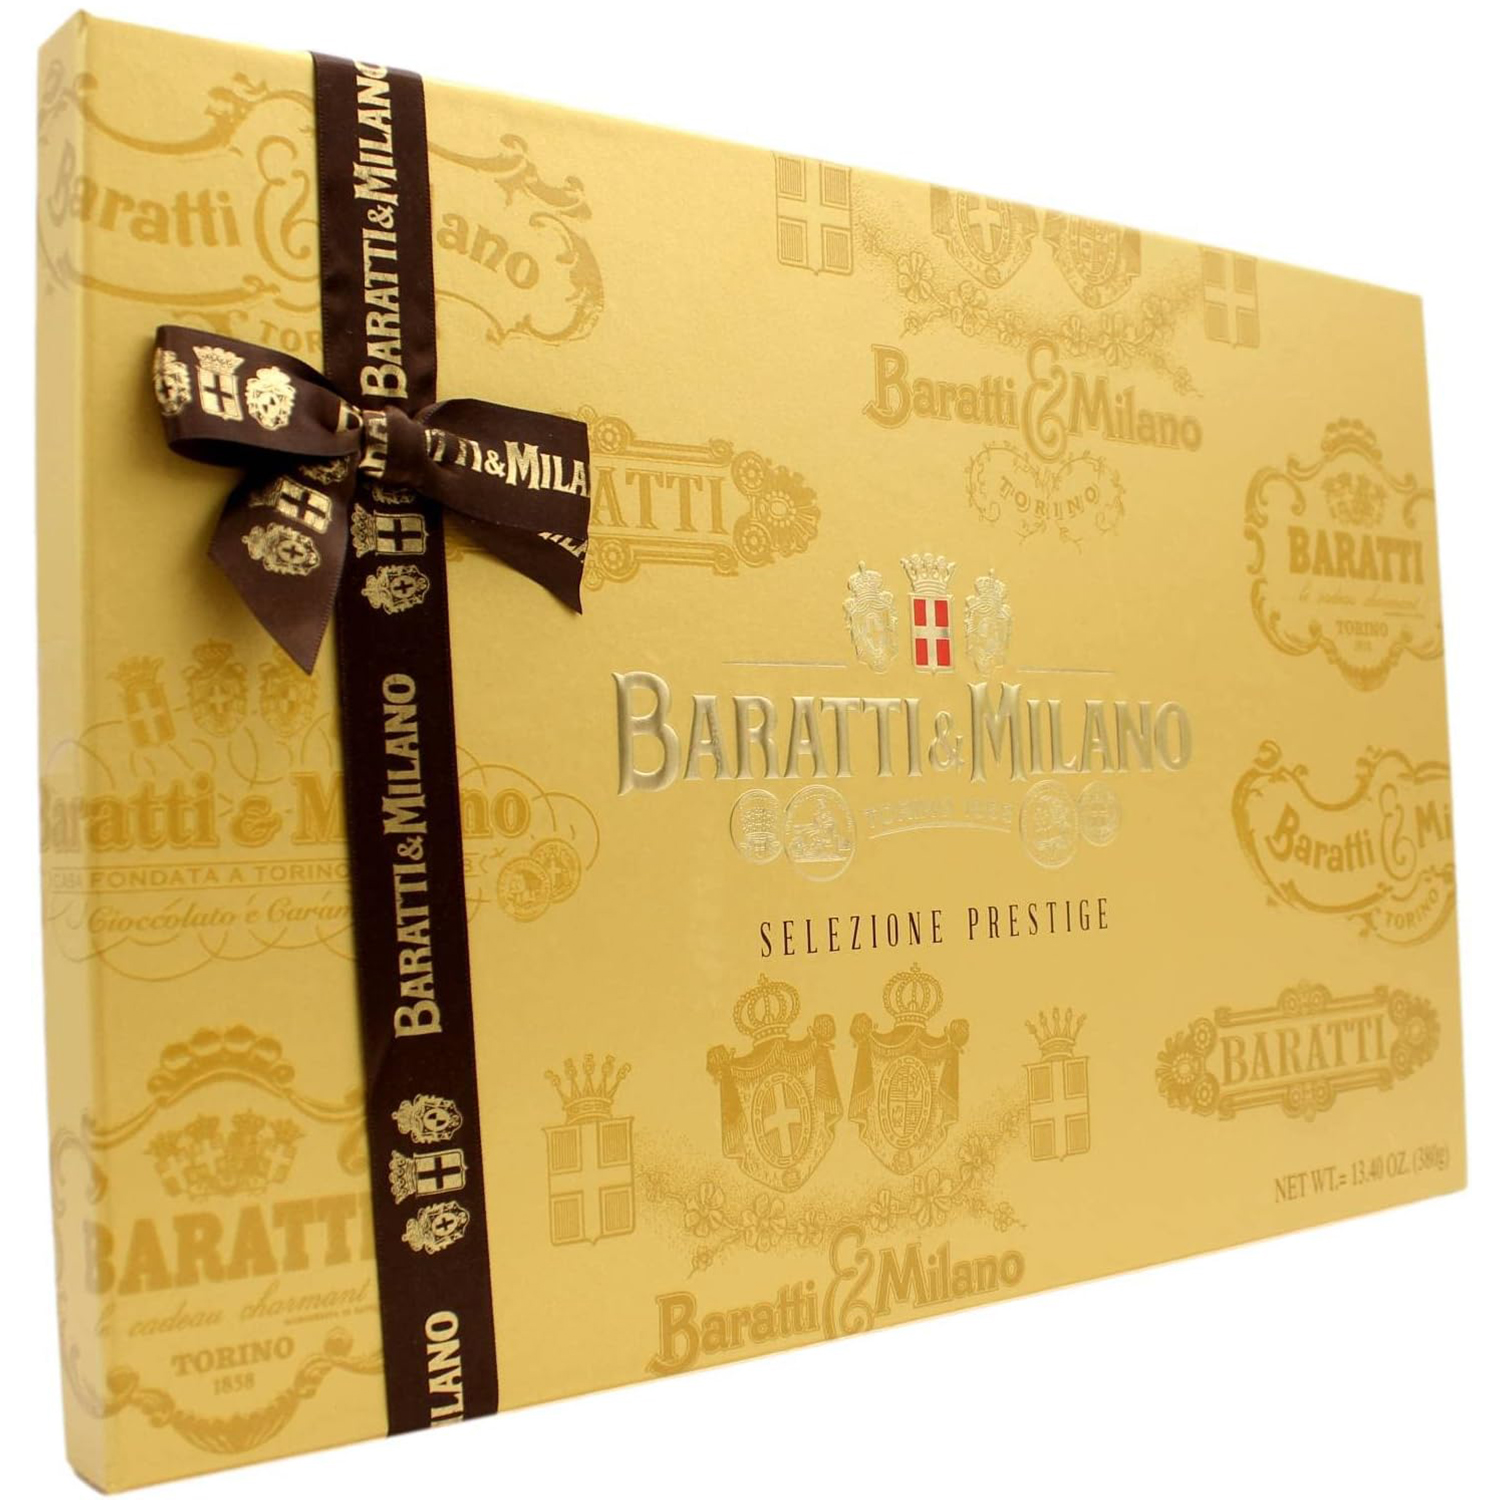 Цукерки Baratti & Milano Selenzione Prestige шоколадні 380 г - фото 1